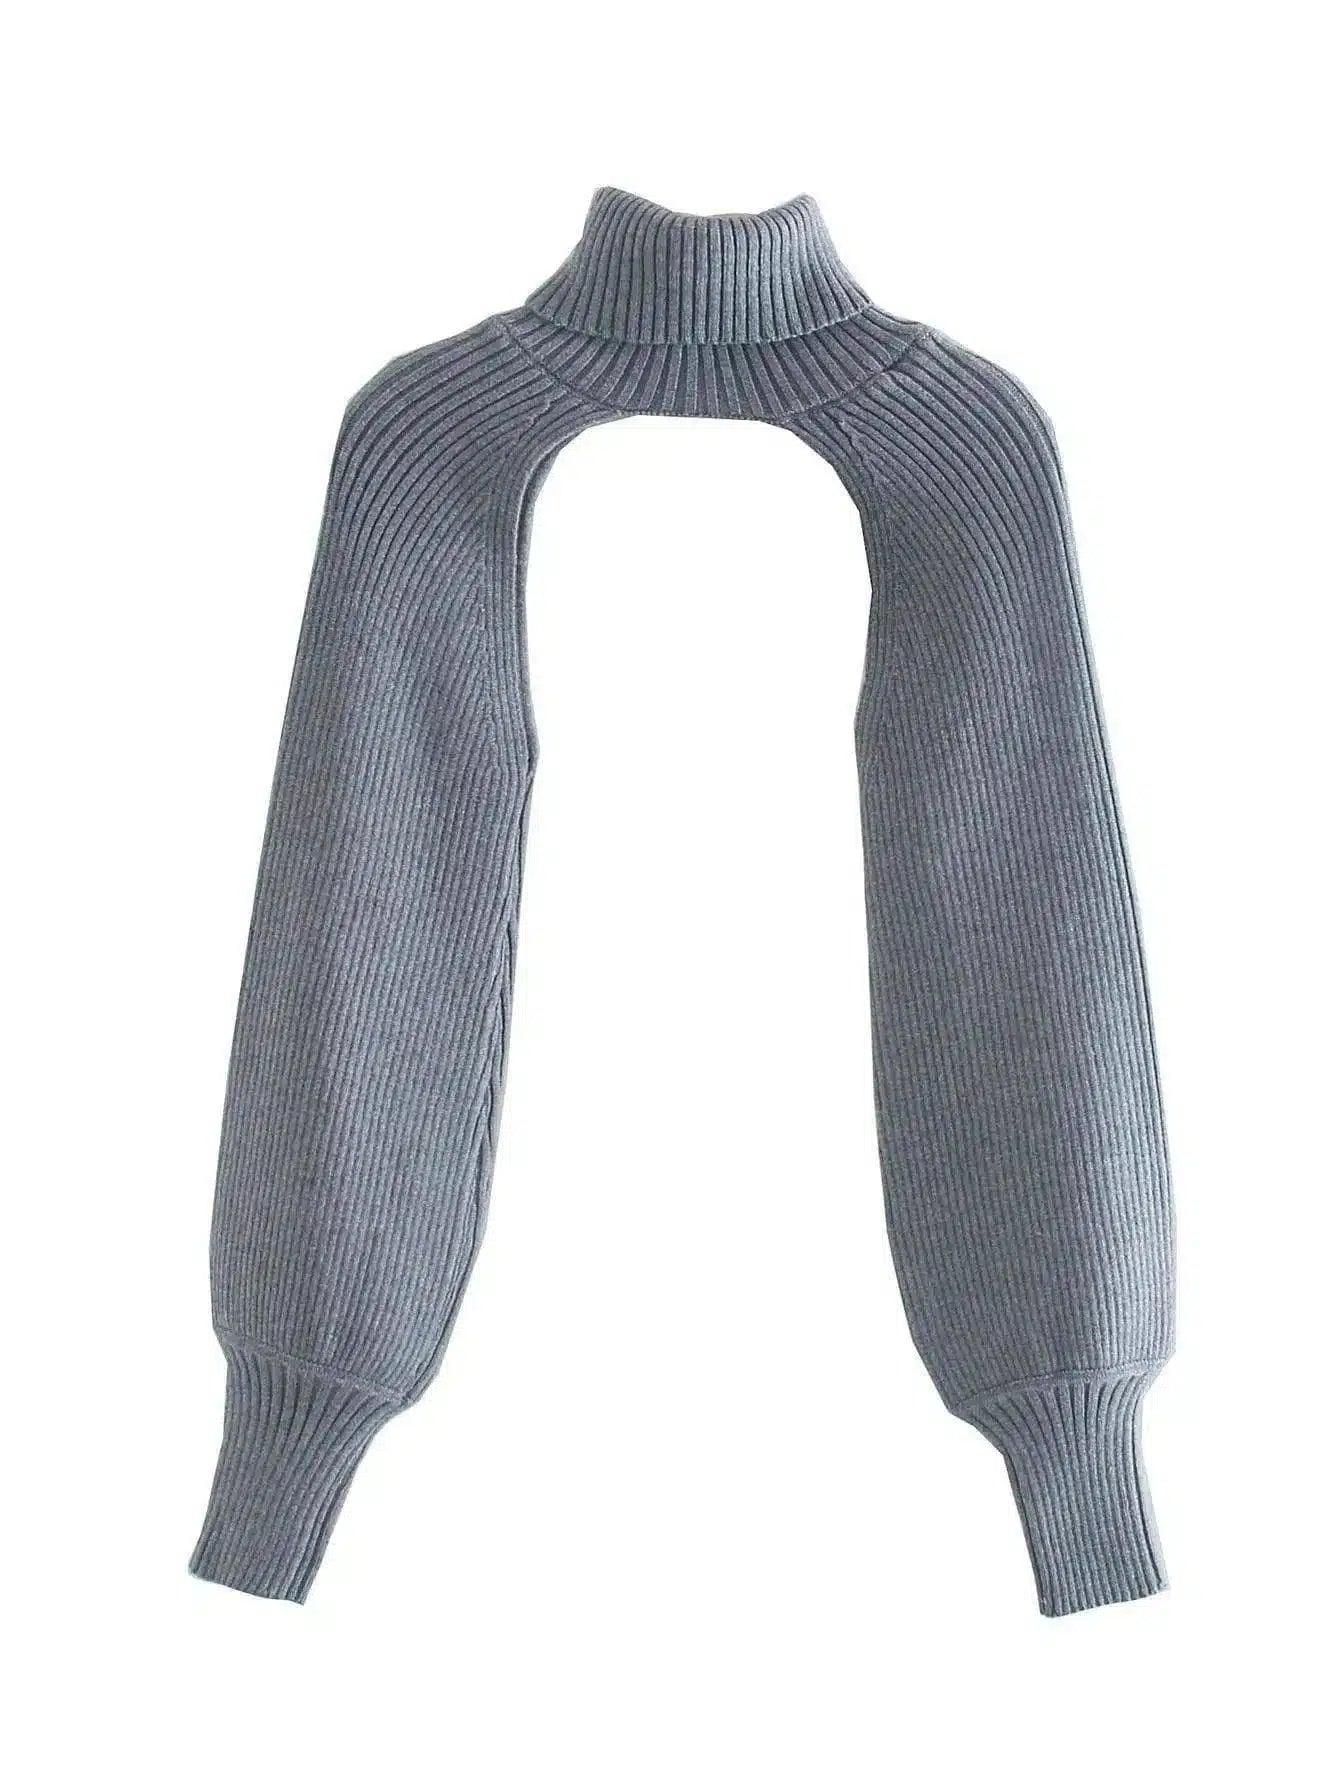 LOVEMI - Lovemi - Retro Scheming Niche Design Knit Sweater Sleeves